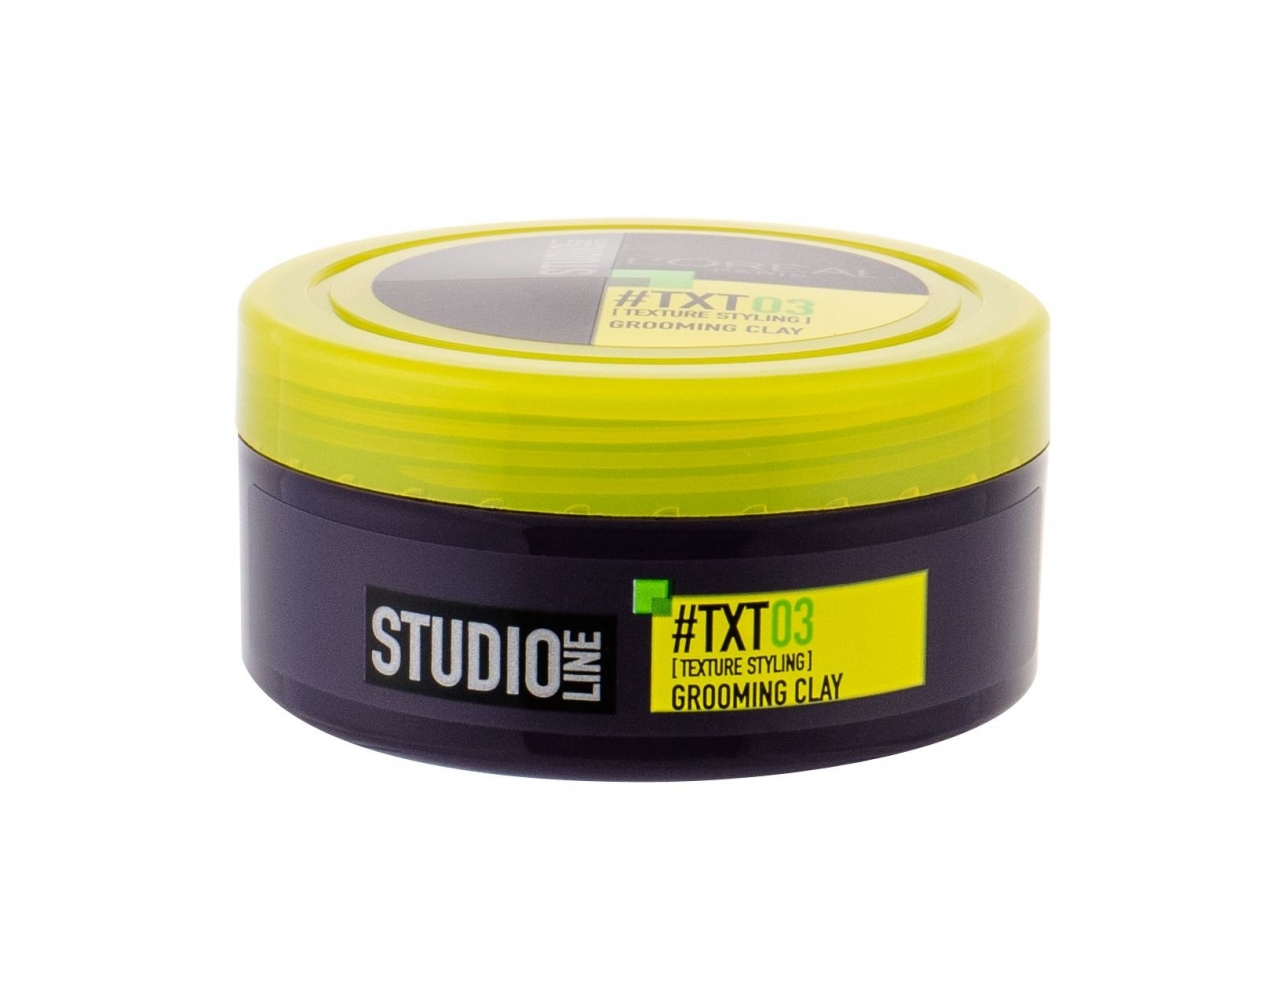 Studio Line TXT 03 Grooming Clay - L´Oreal Paris -